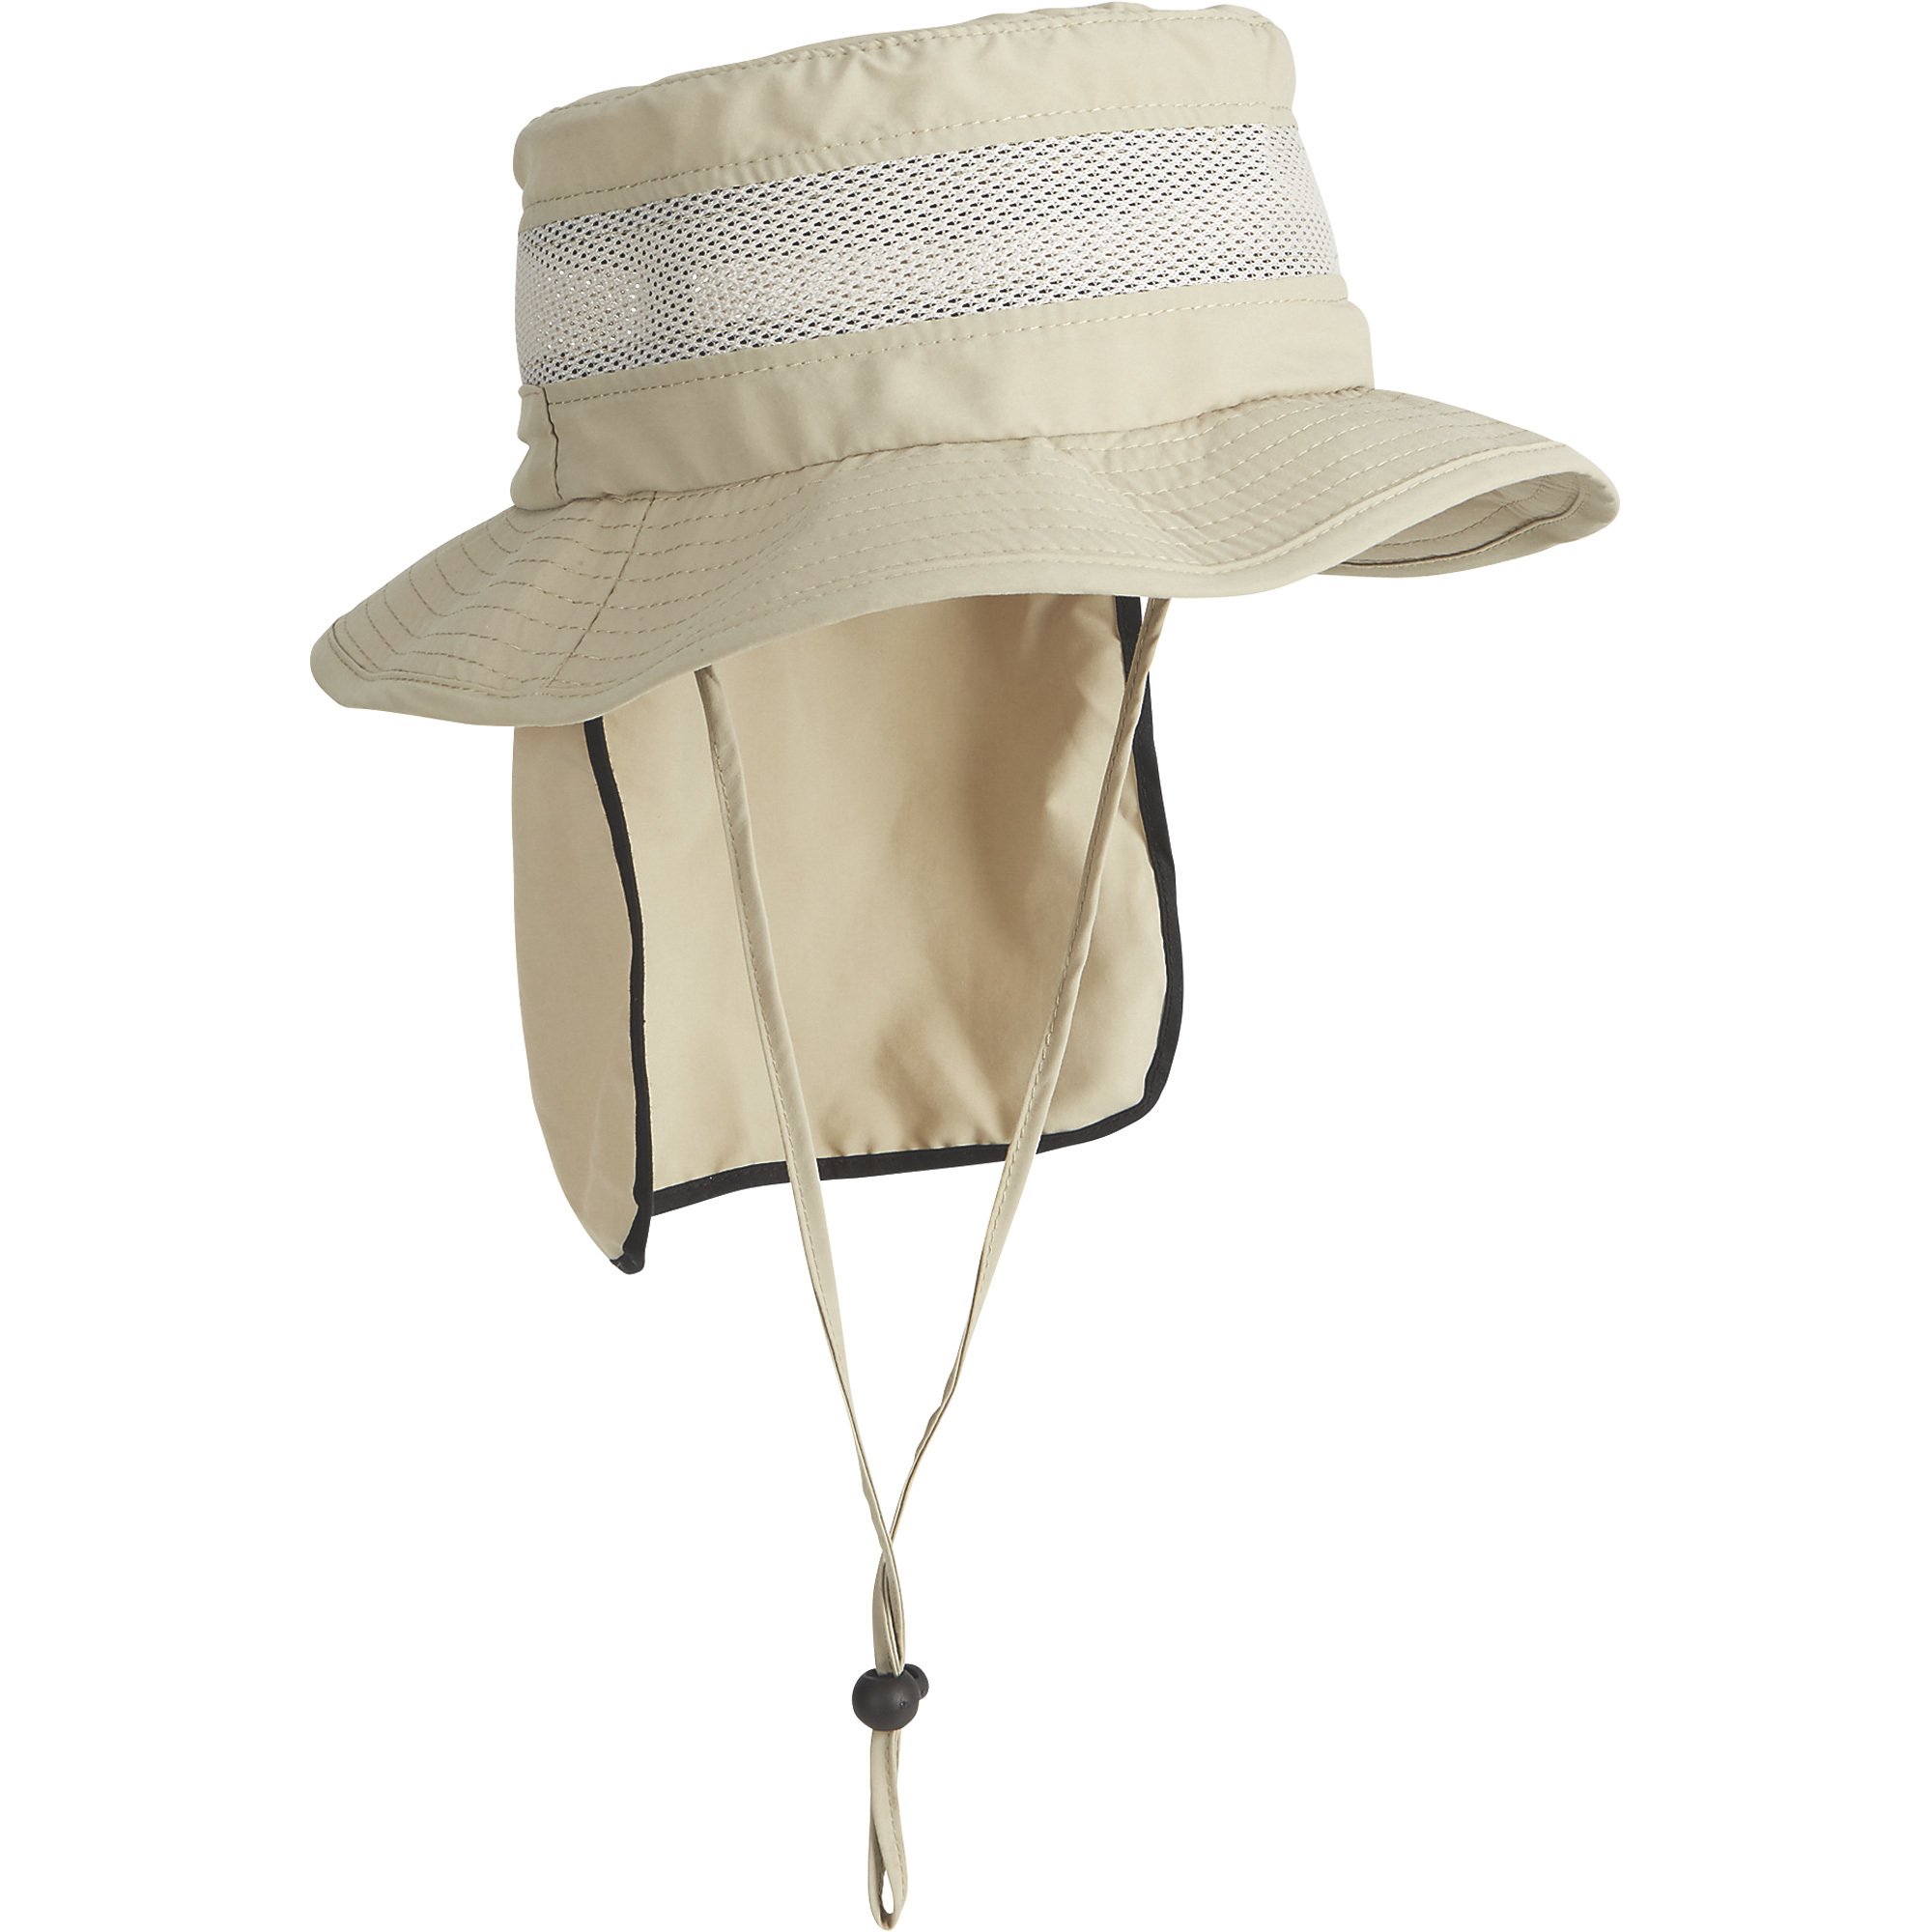 Stetson Boonie Hat with Neck Flap — Khaki, Large, Model# DHC199-KAKI3